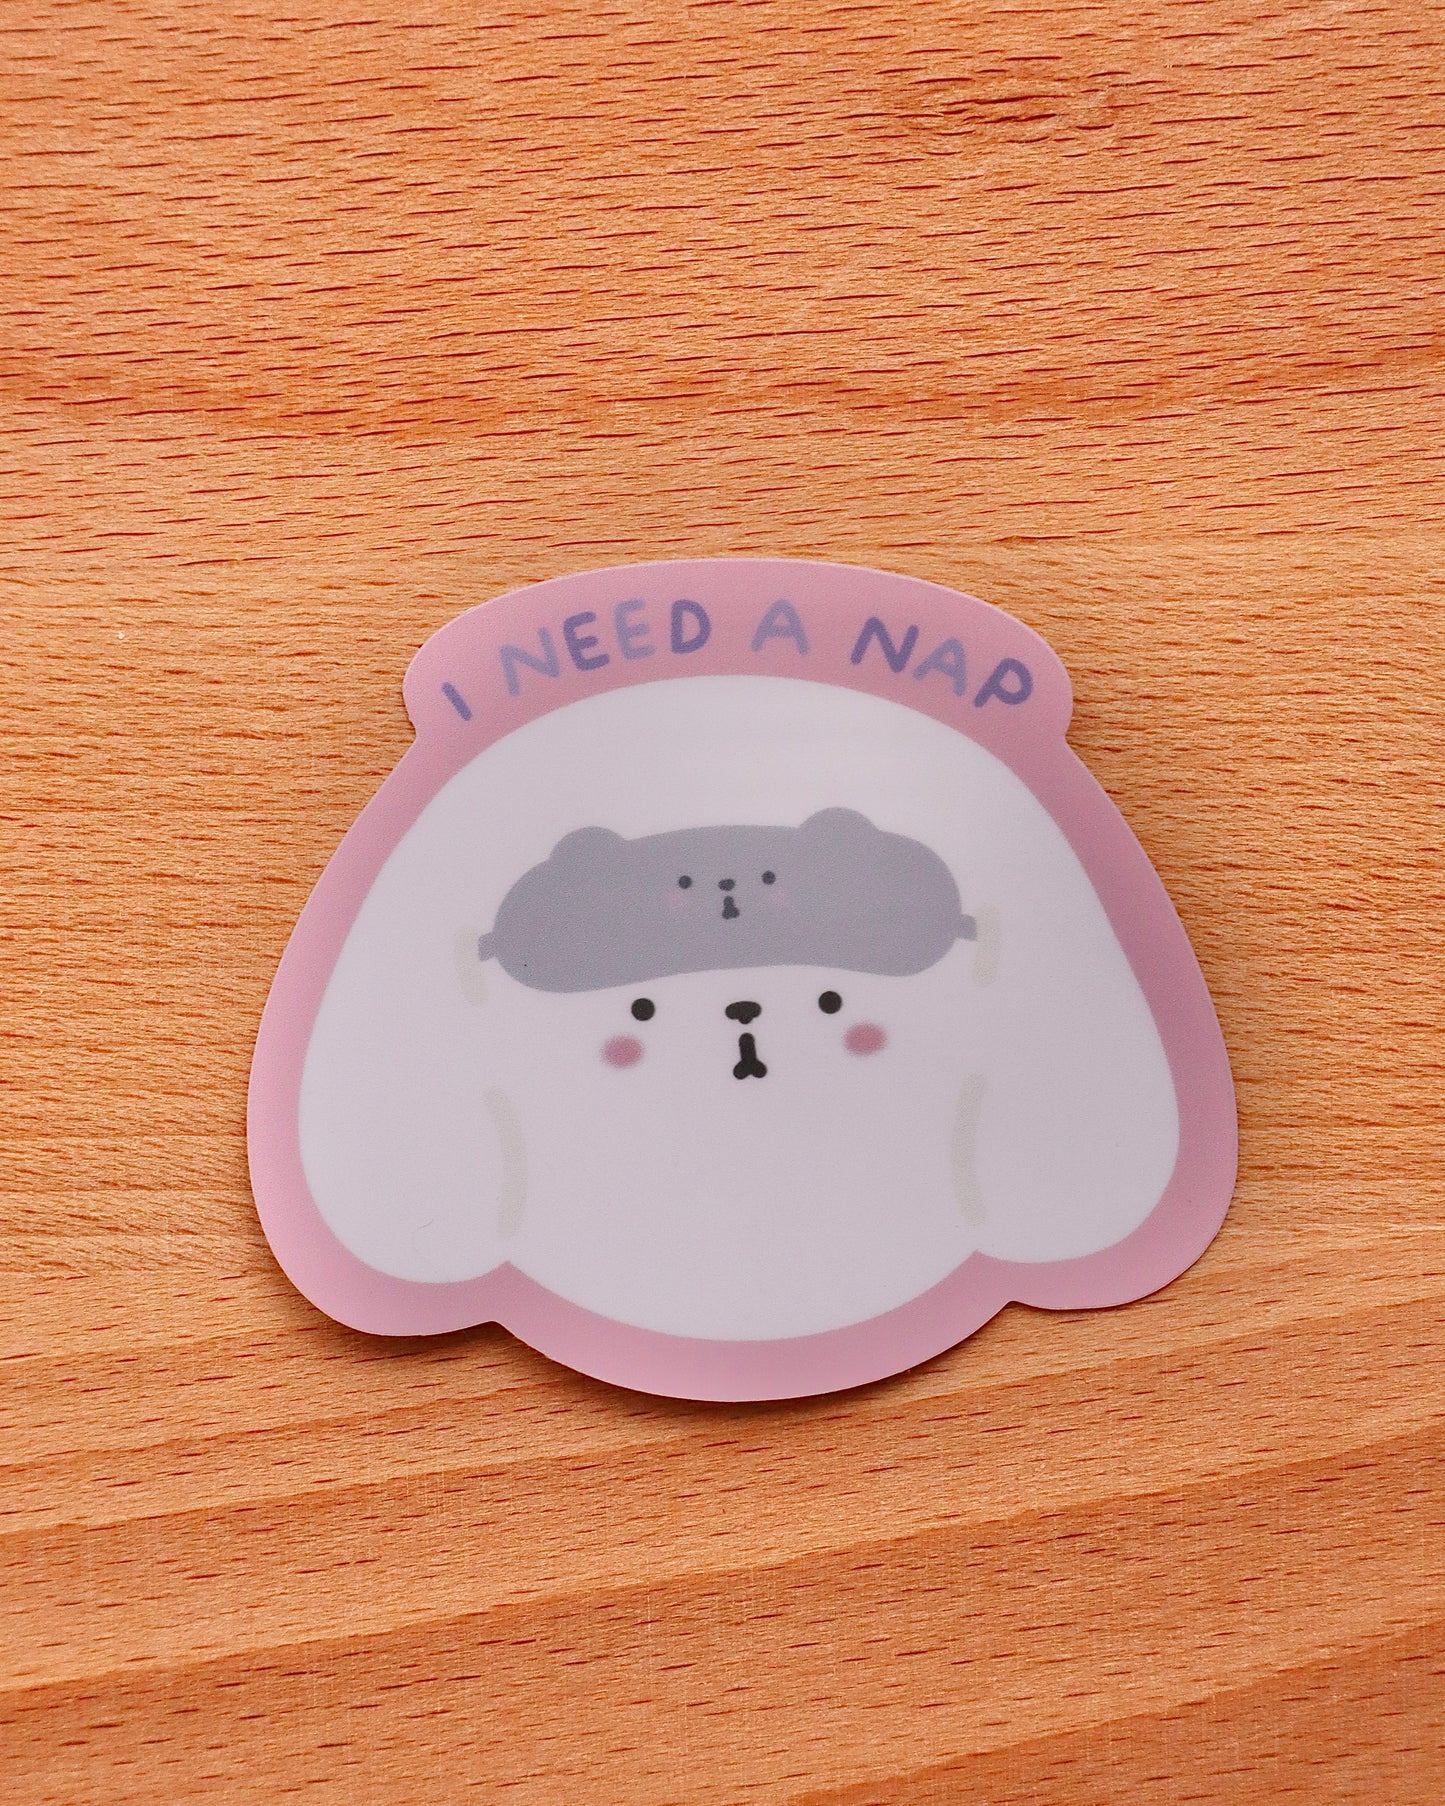 Marche I Need A Nap Die-Cut Sticker